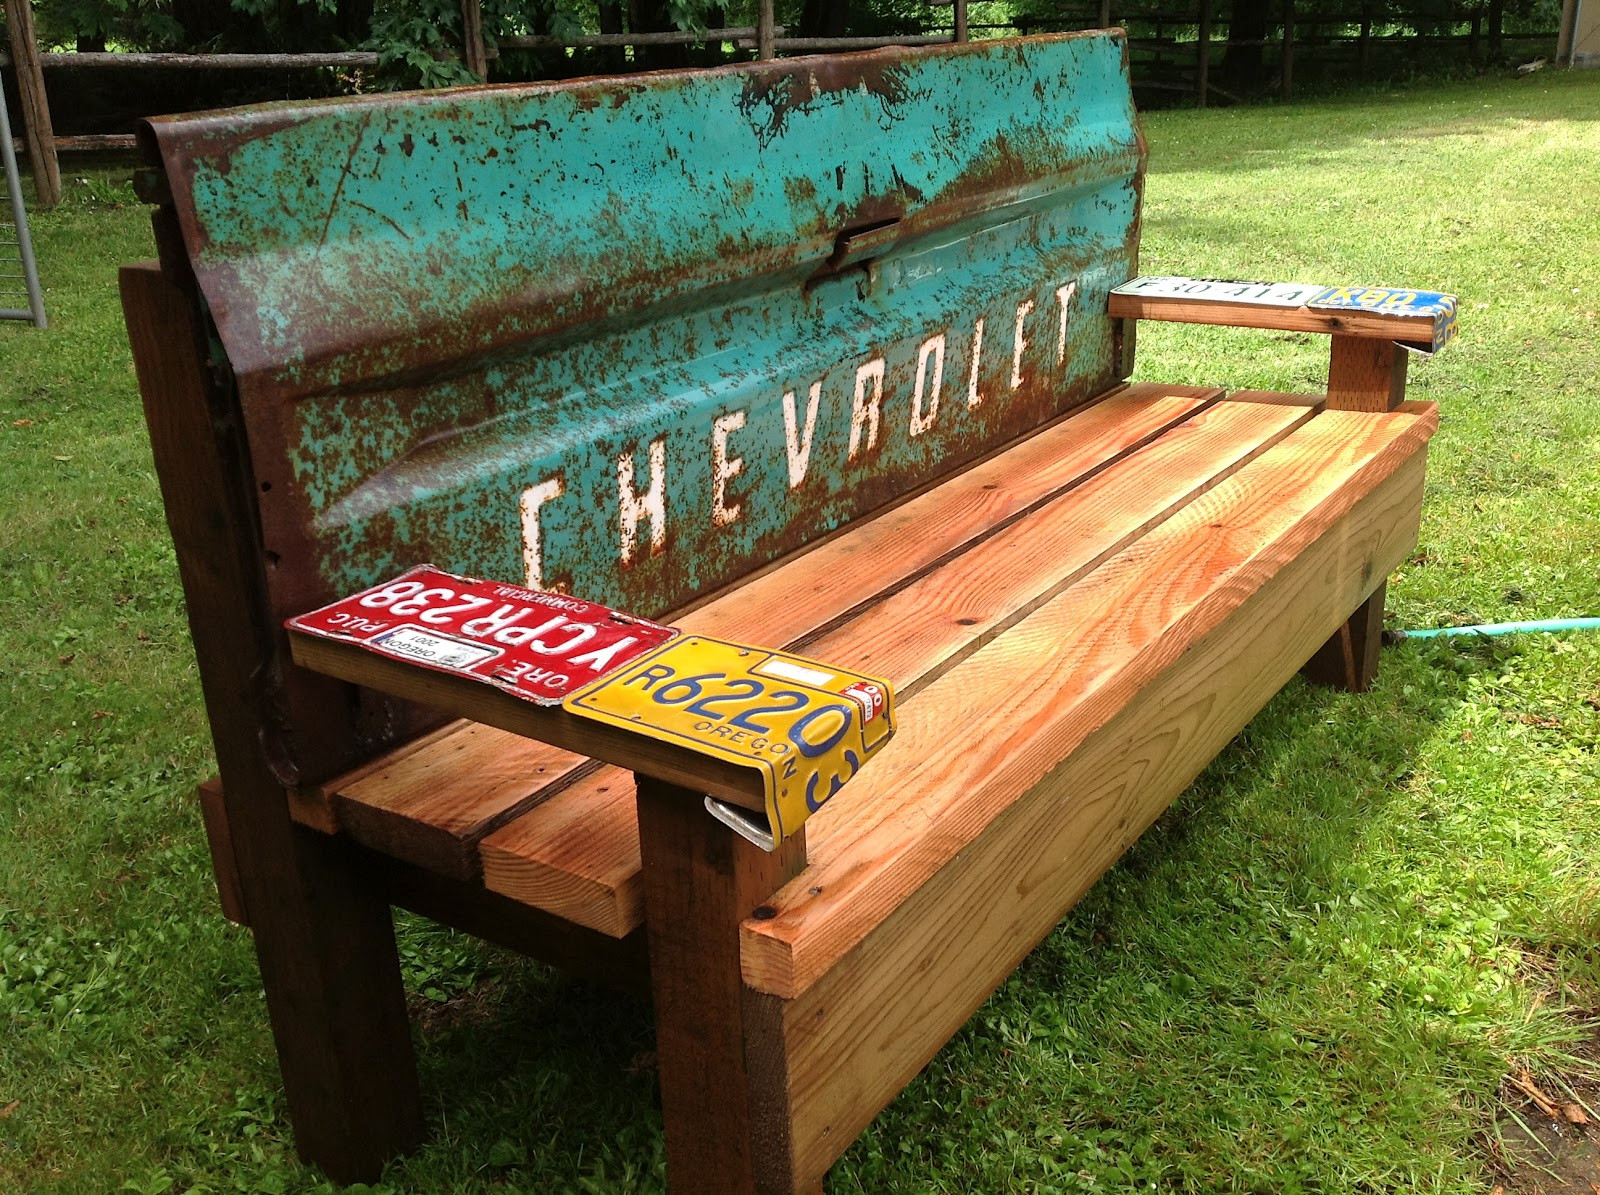 Best ideas about DIY Garden Bench
. Save or Pin Kathi s Garden Art Rust n Stuff Team building Garden Now.